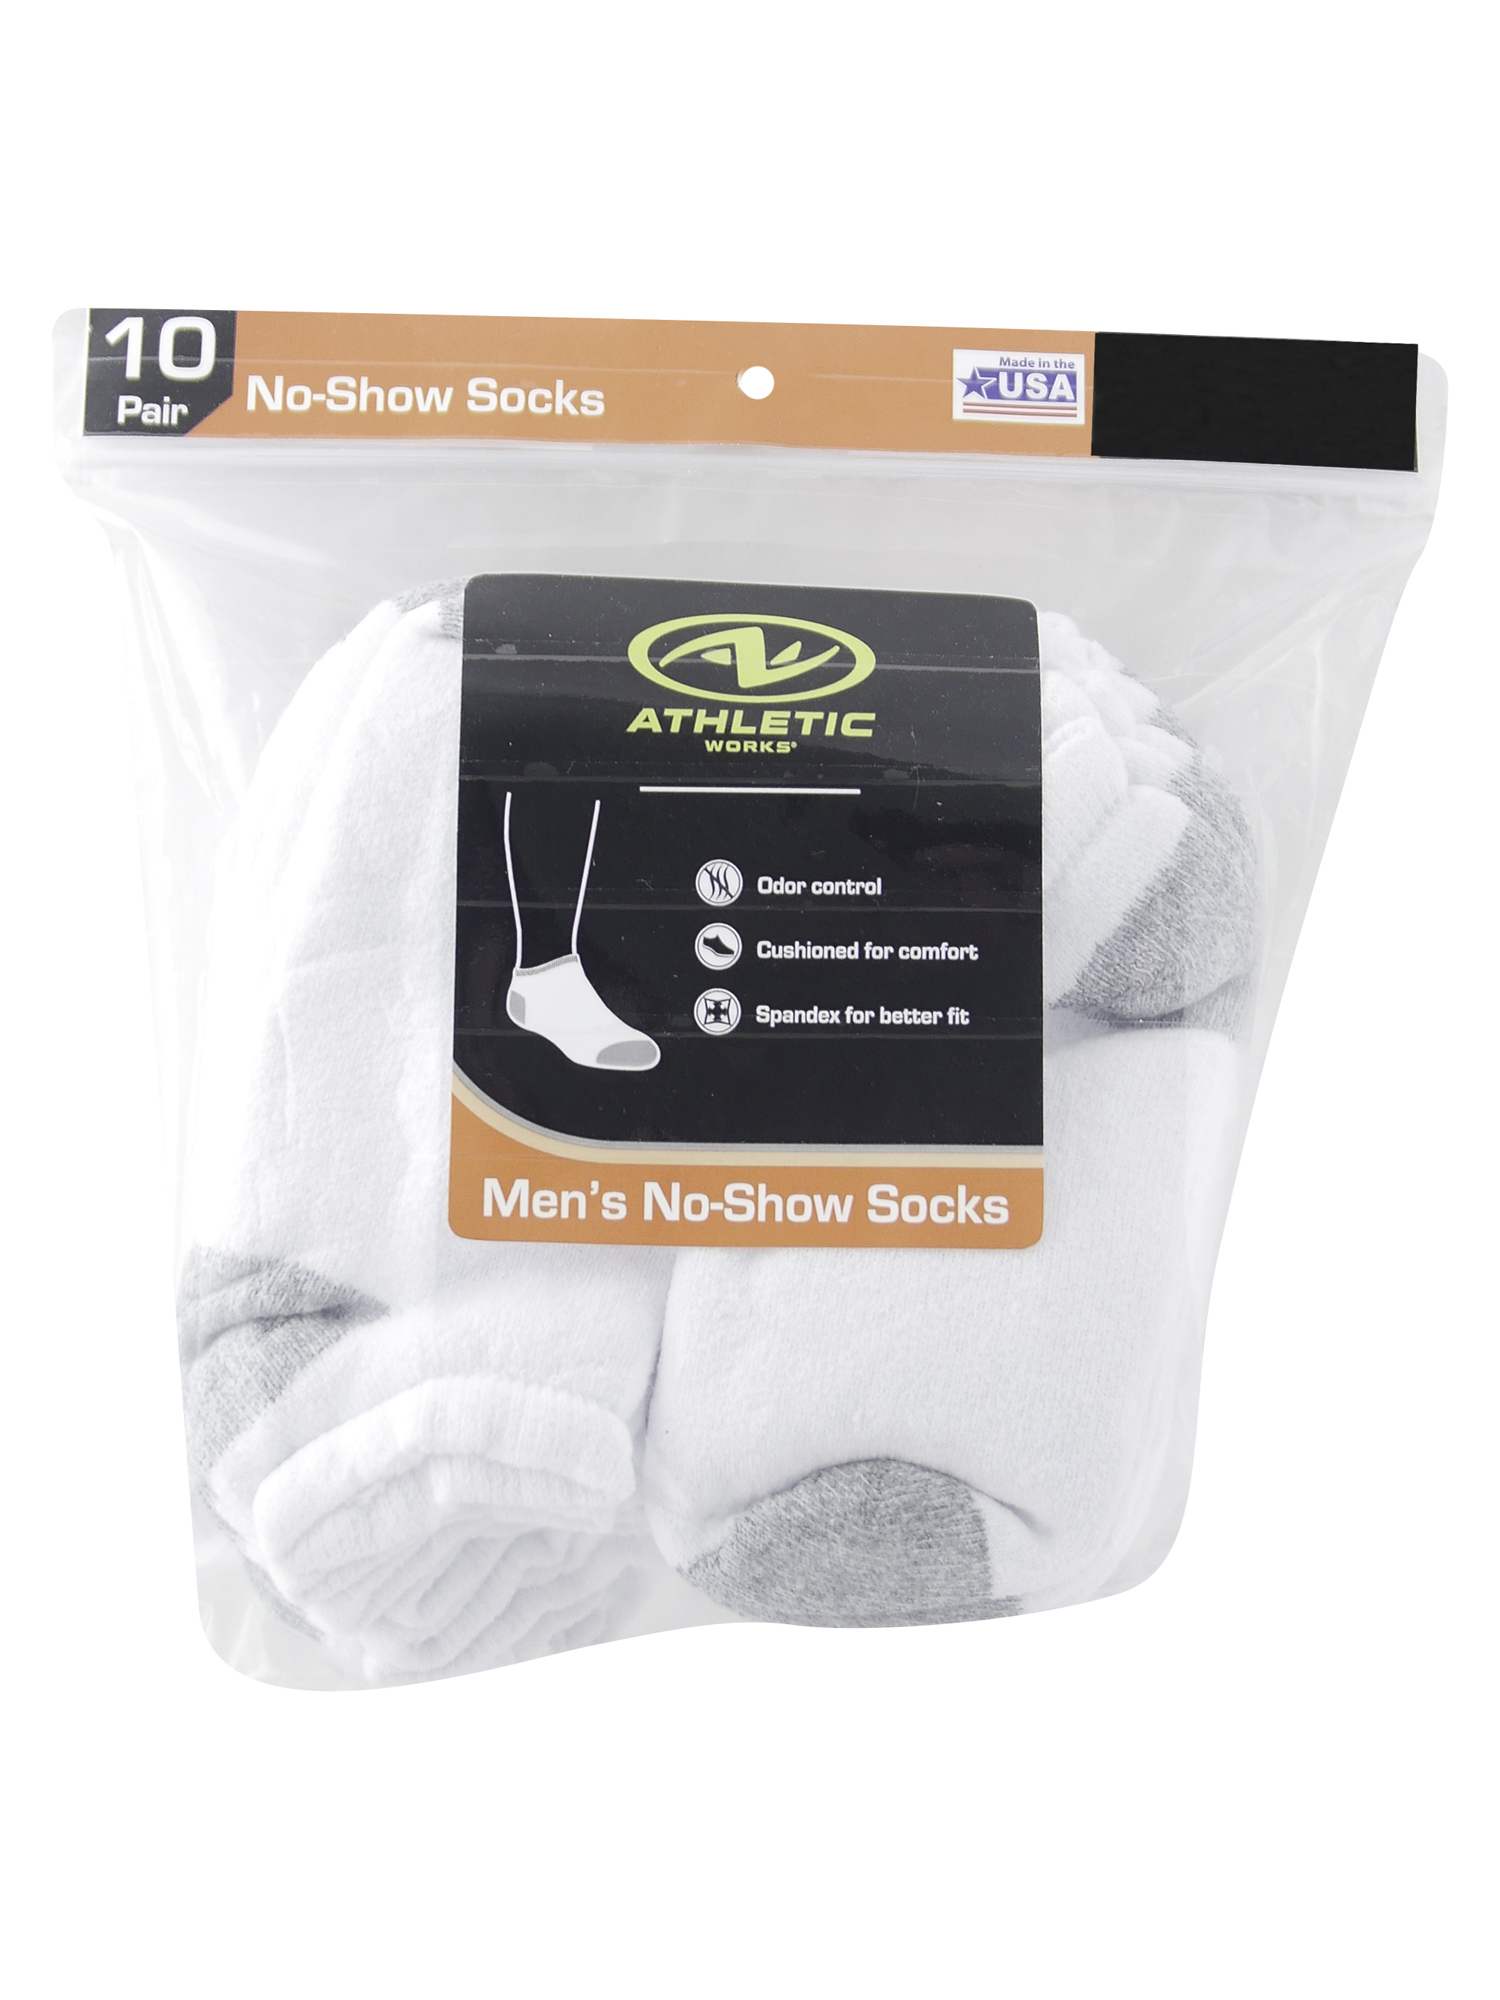 Men's No Show Socks 10 Pack - image 3 of 3